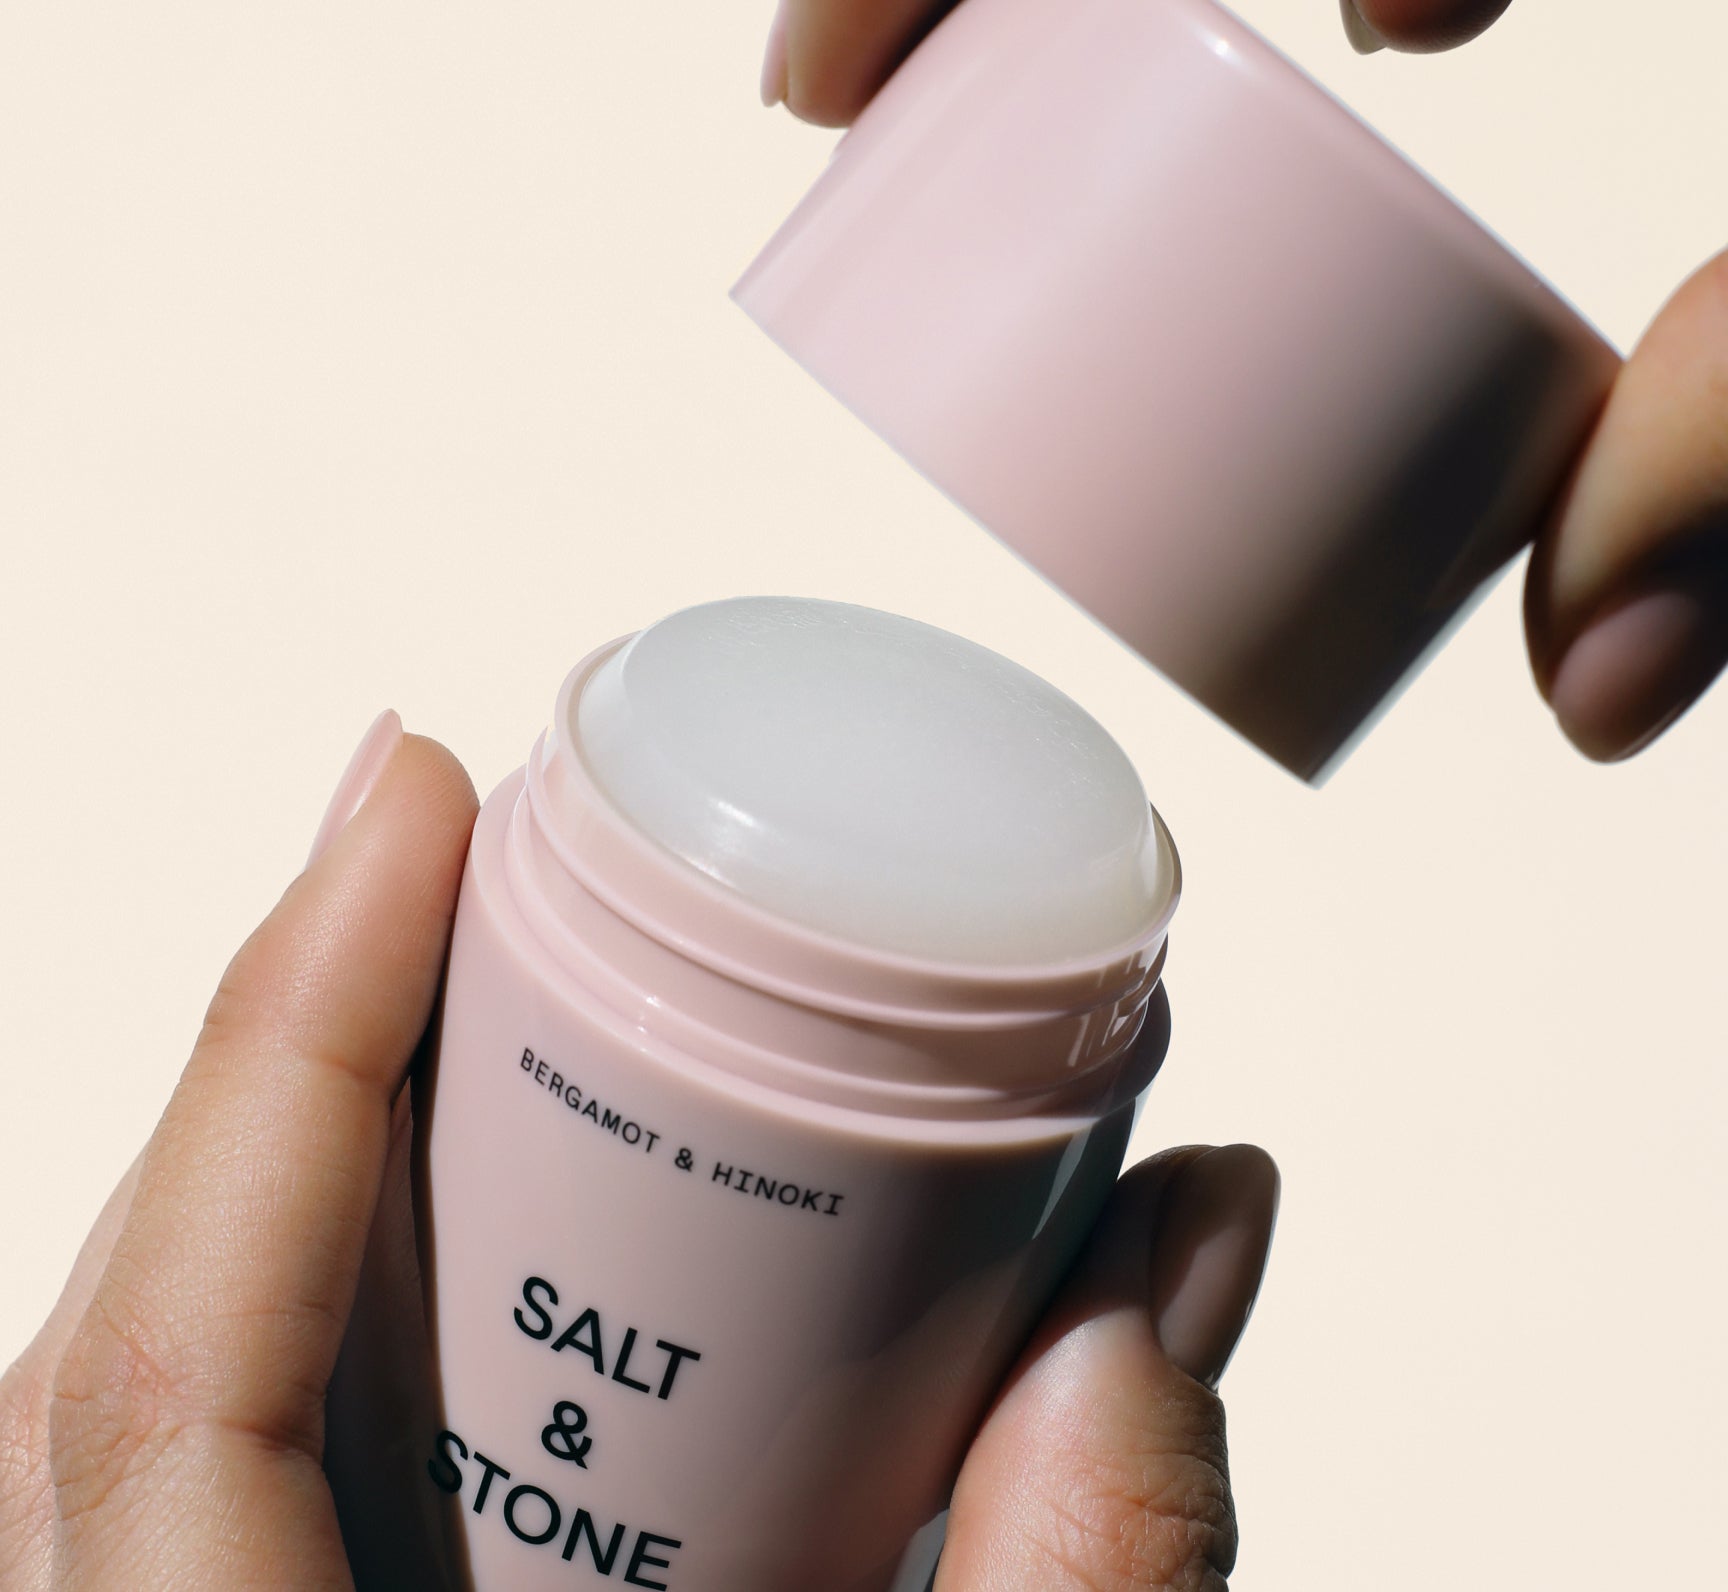 Déodorant gel peau sensible – Bergamote & Hinoki Salt & Stone Suisse